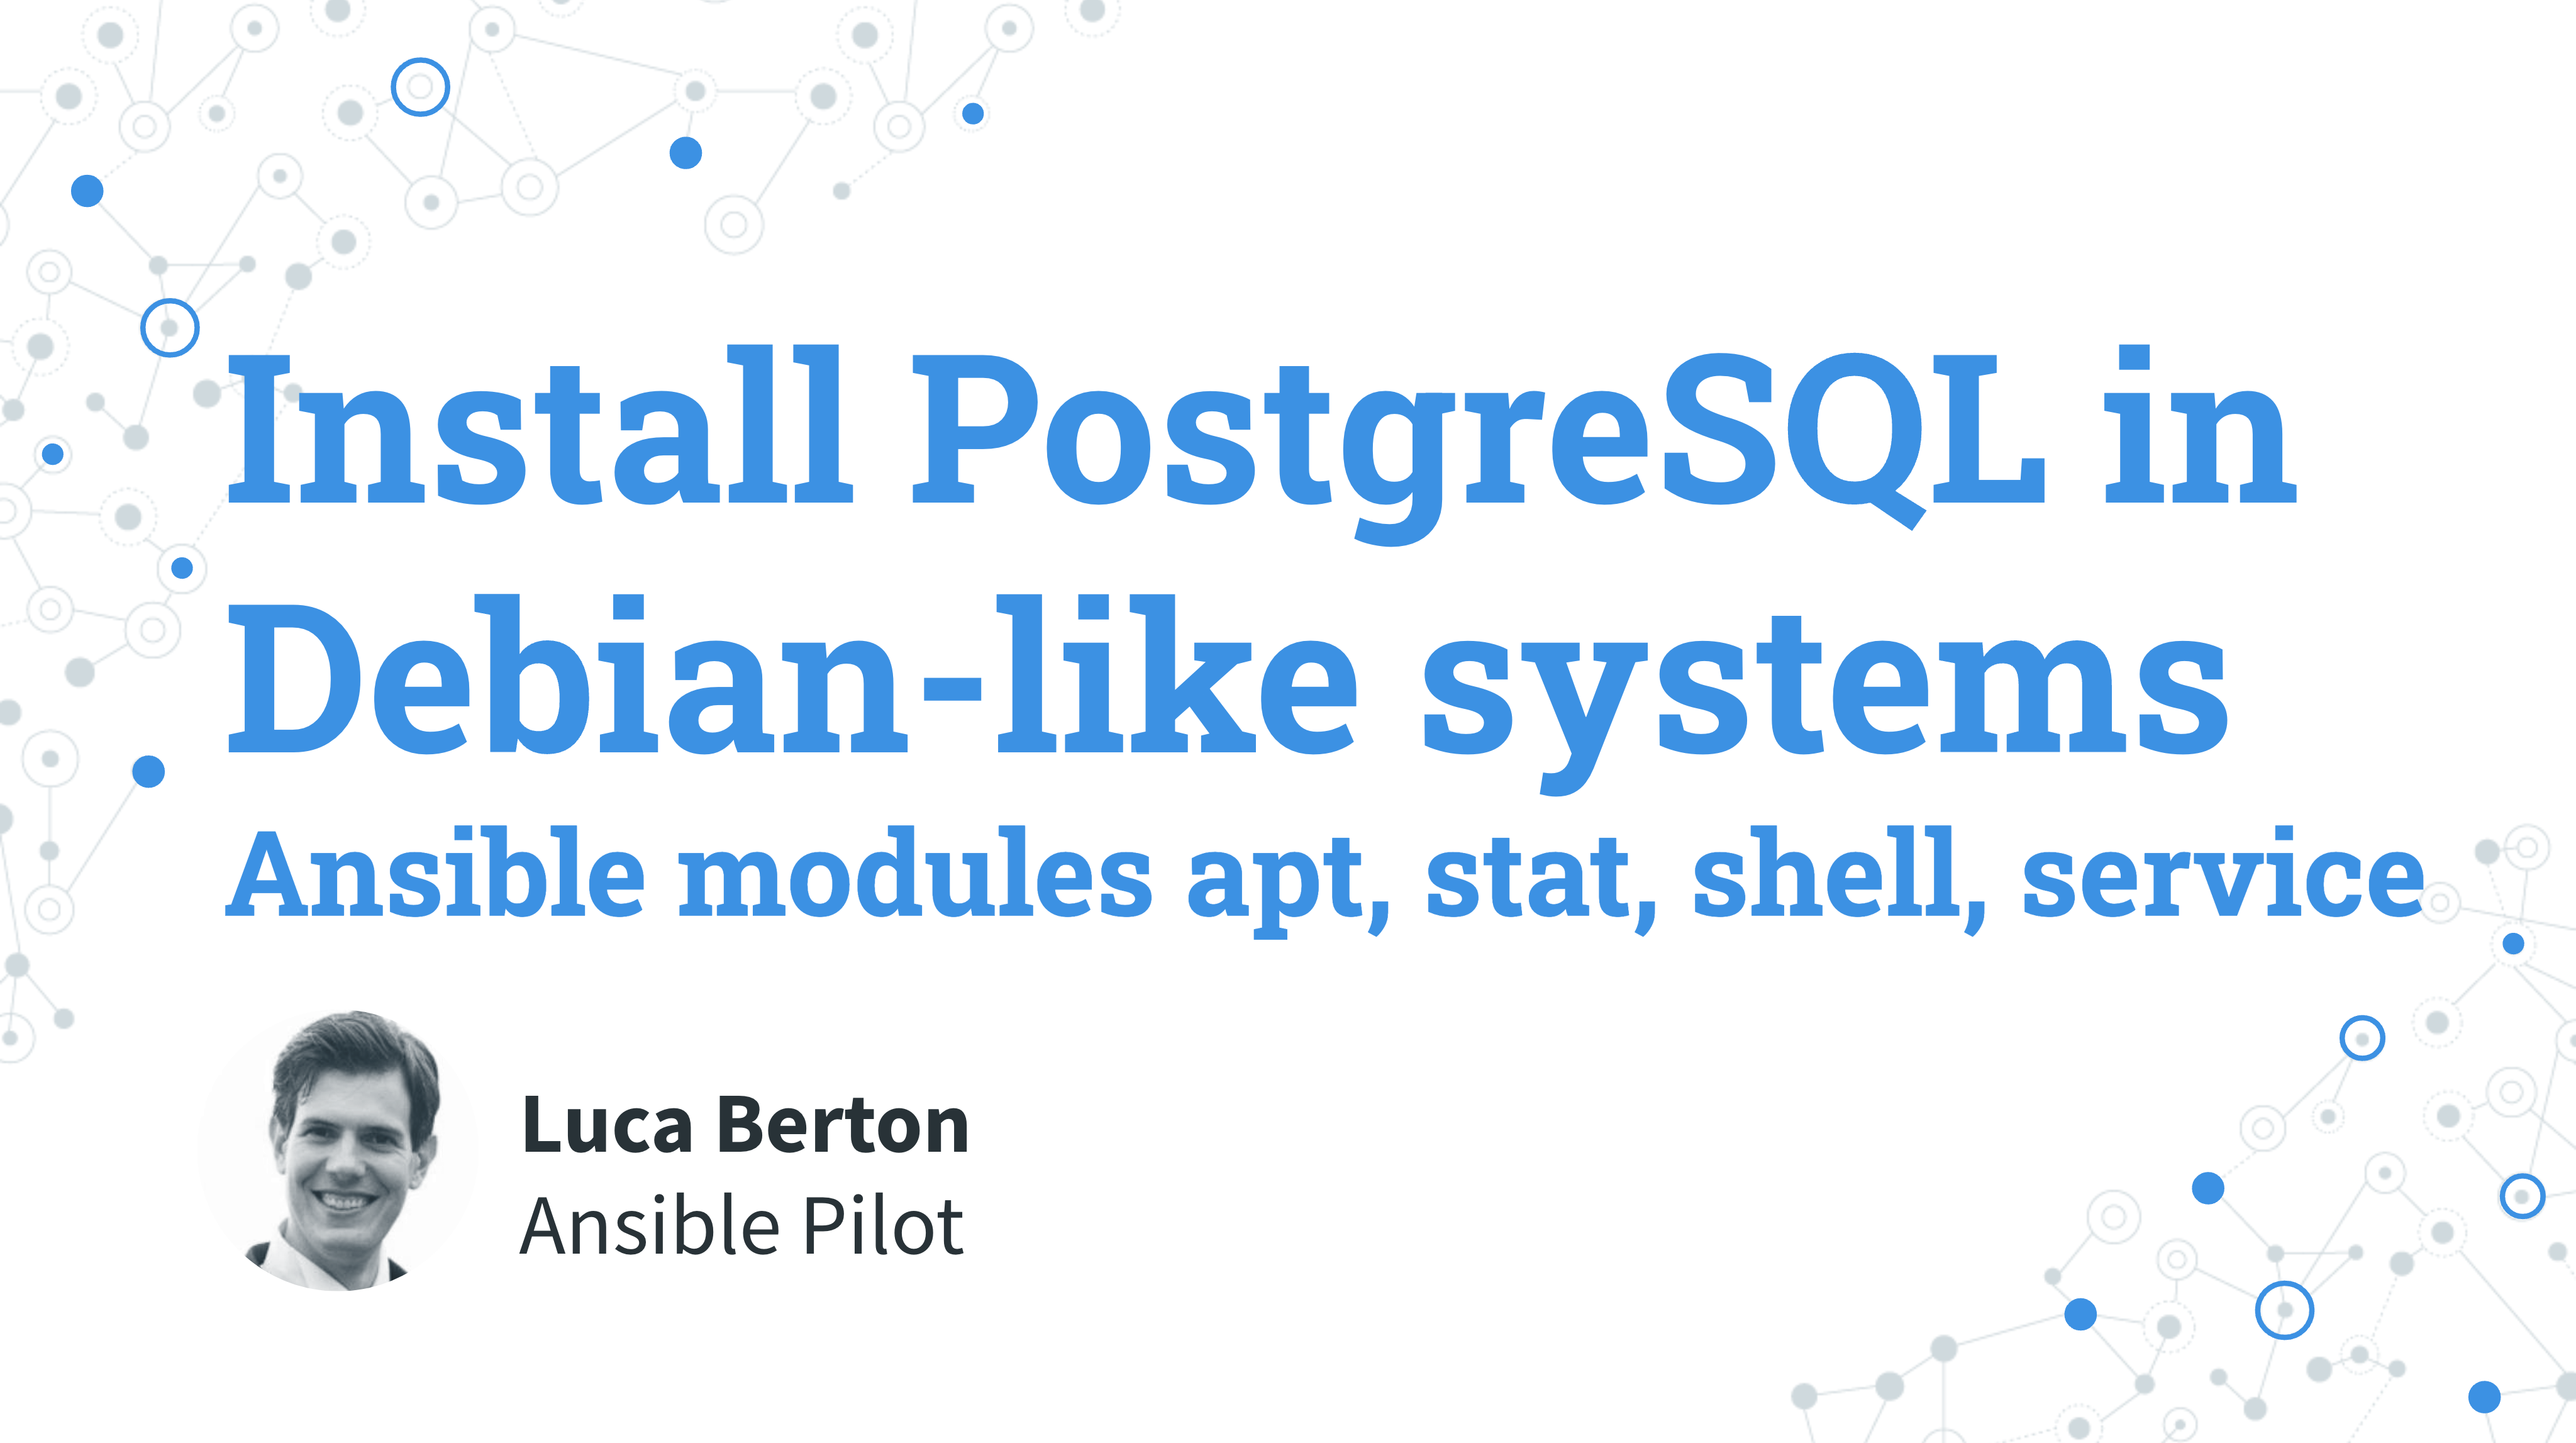 Install PostgreSQL in Debian-like systems - Ansible modules apt, stat, shell, service